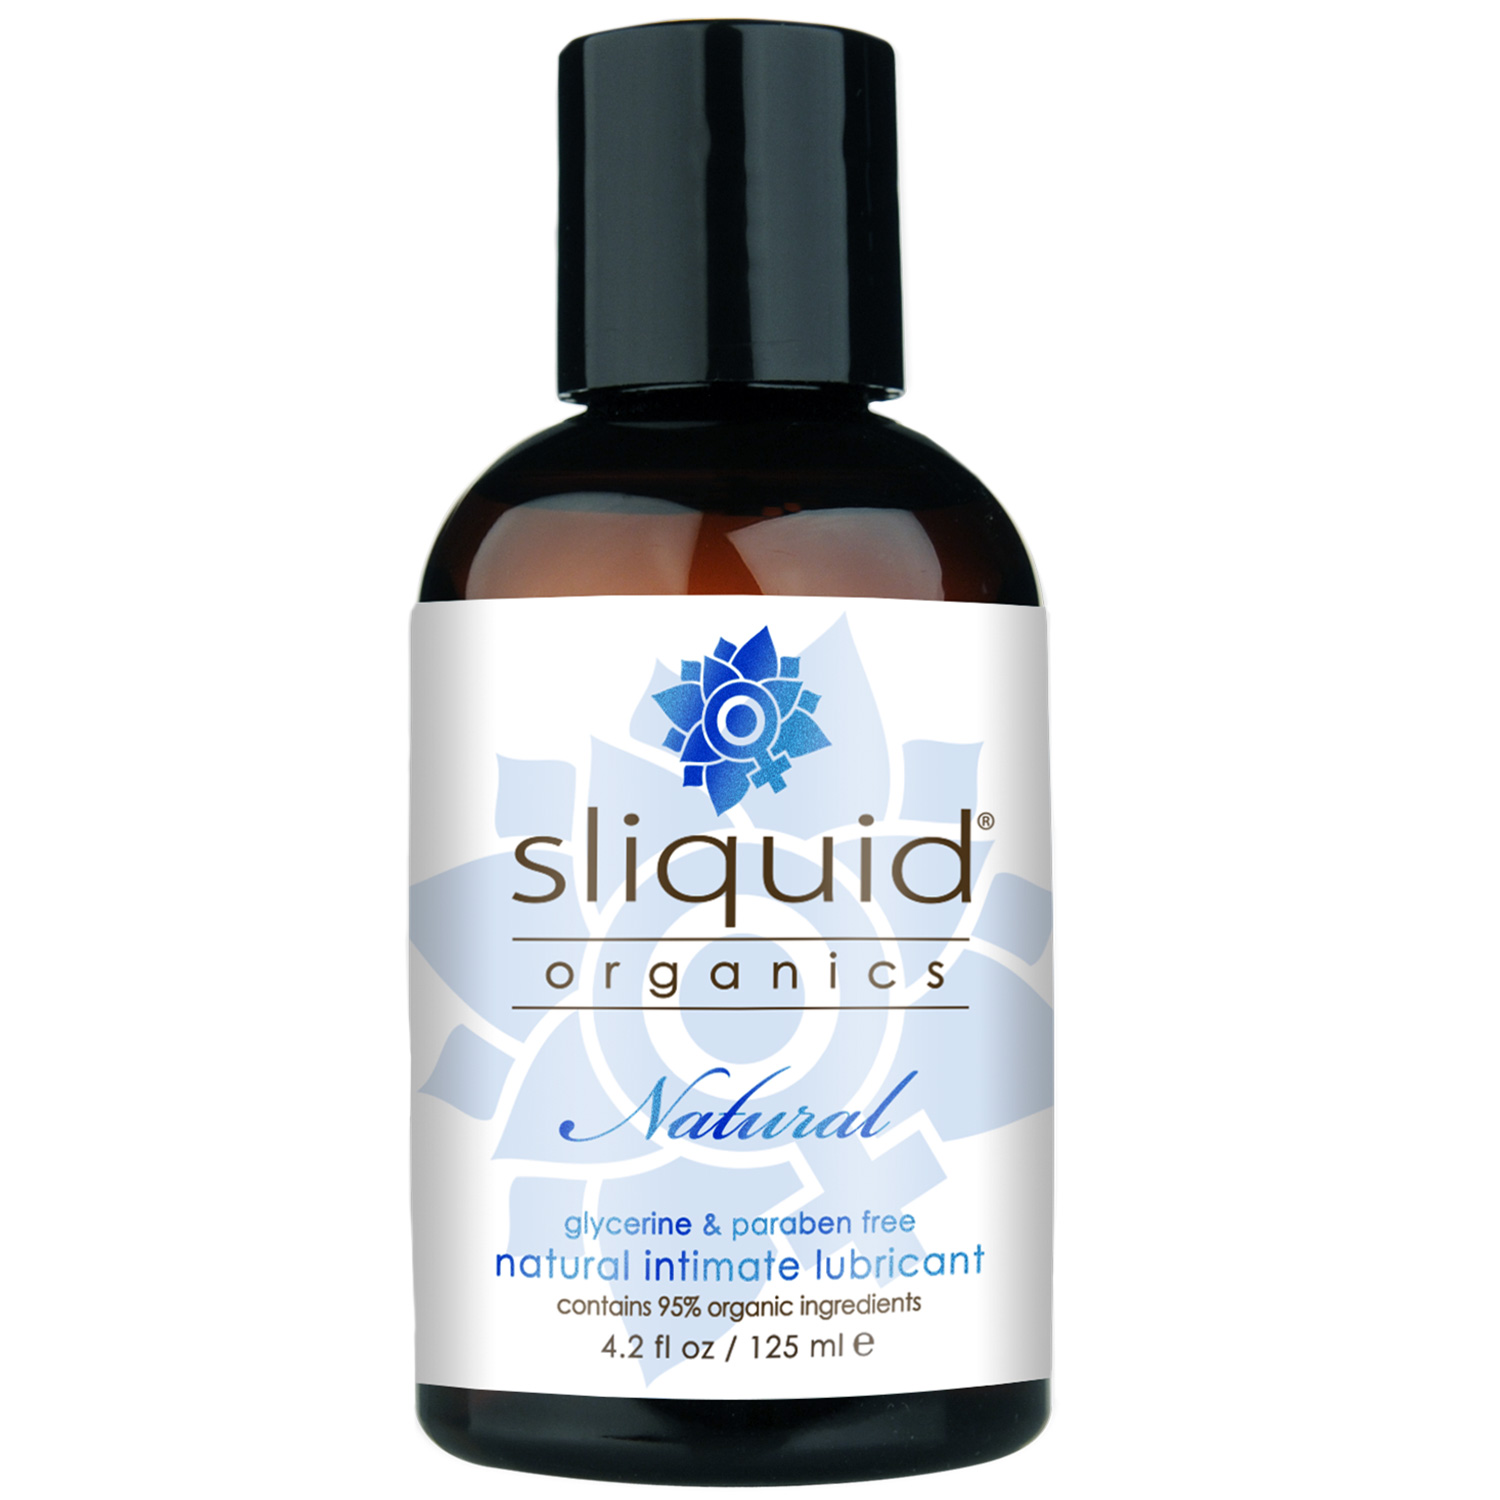 Sliquid Organics Natural Glidecreme 125 ml - Clear